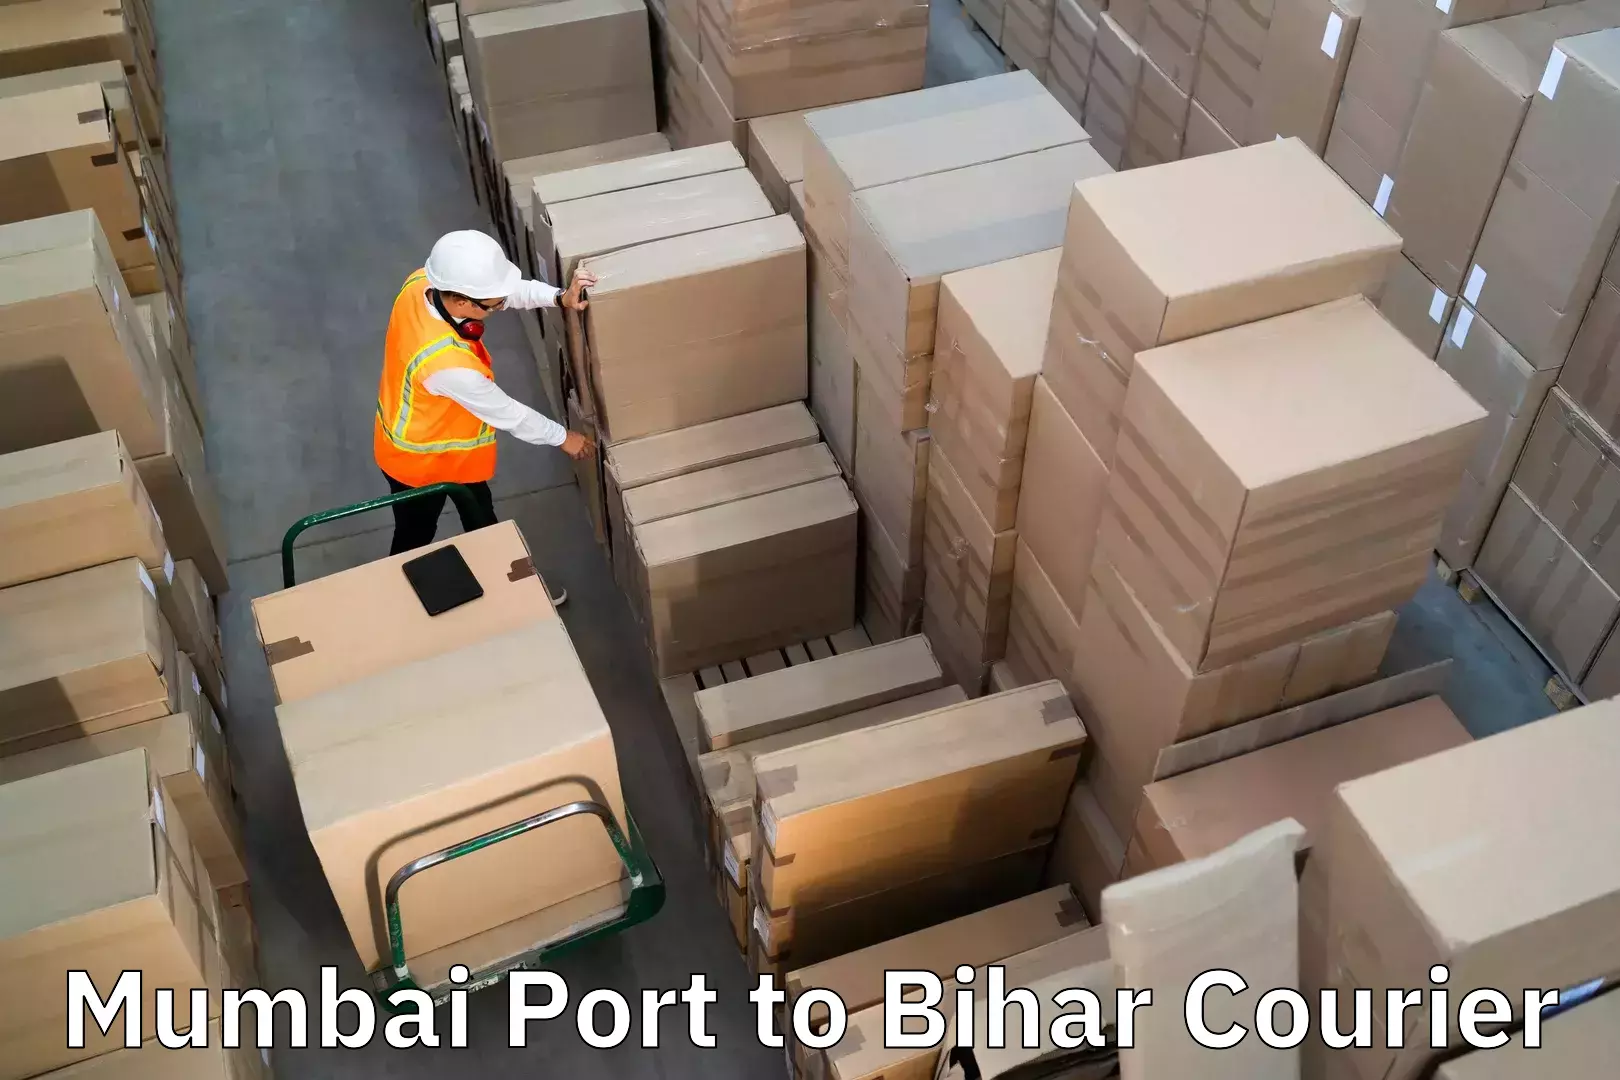 Baggage shipping quotes Mumbai Port to Fatwah